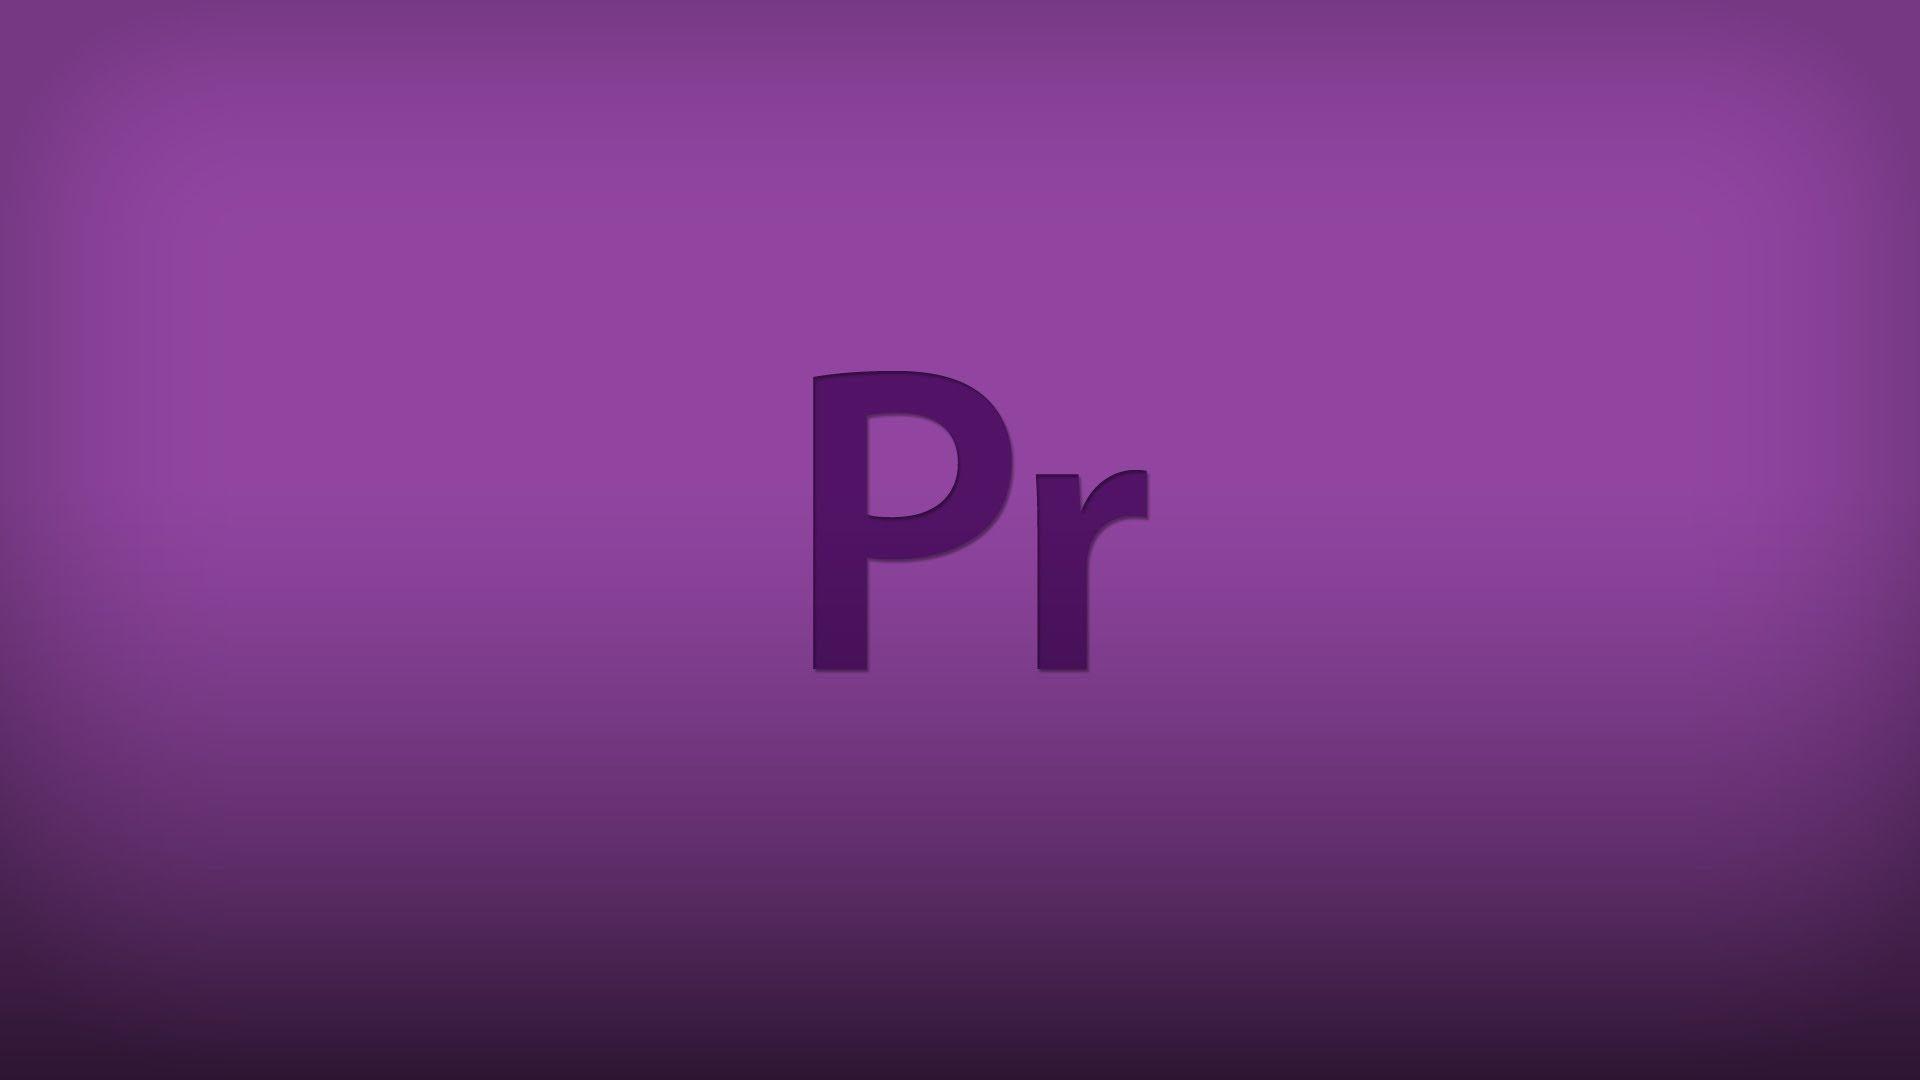 Adobe Premiere Pro Wallpaper. Adobe